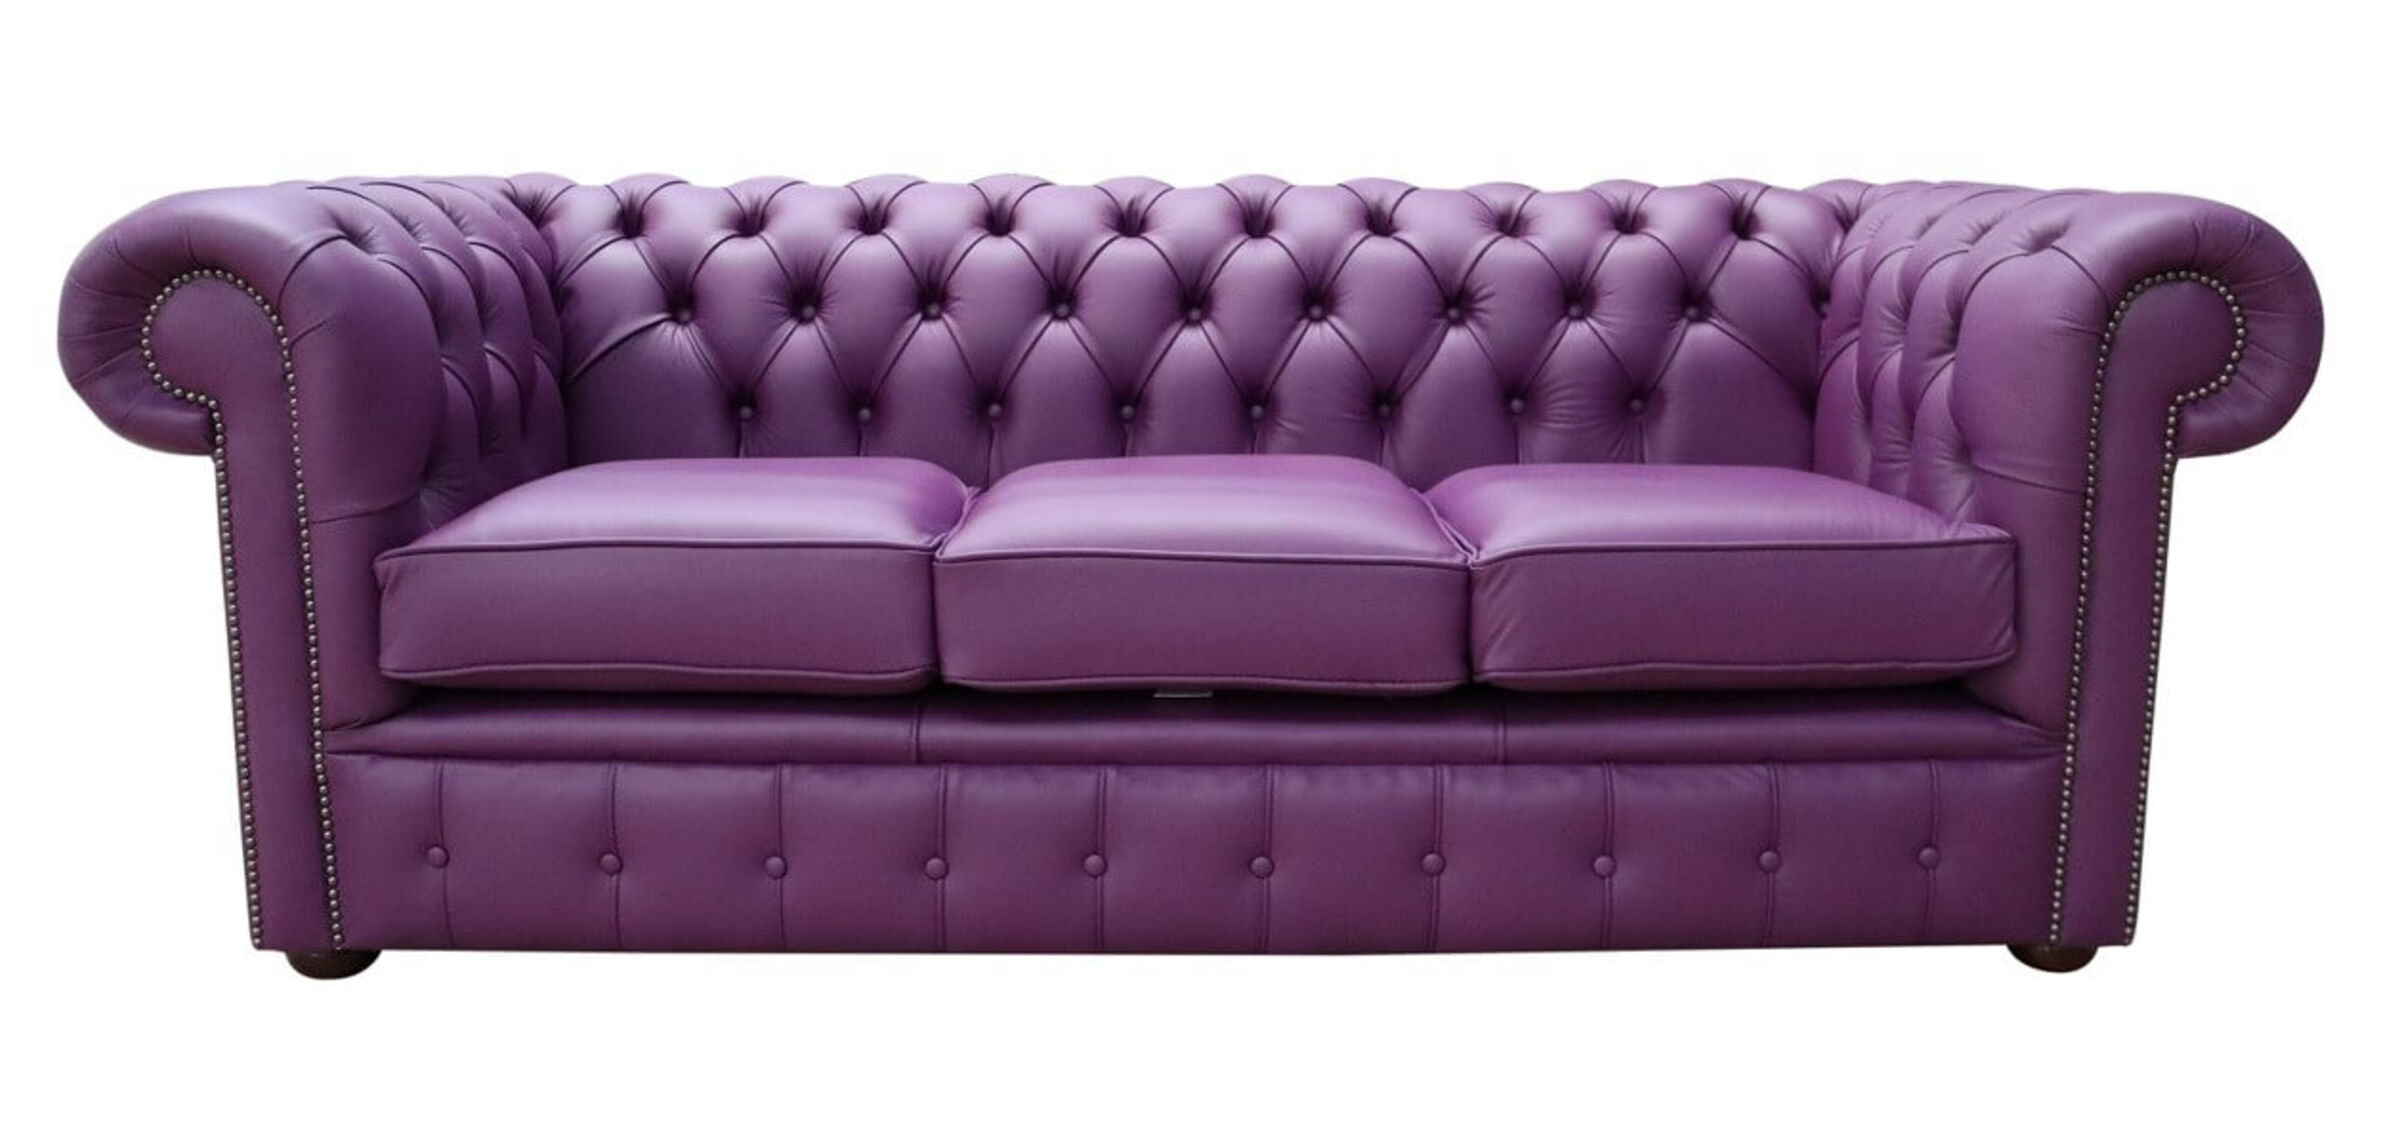 deep purple leather sofa